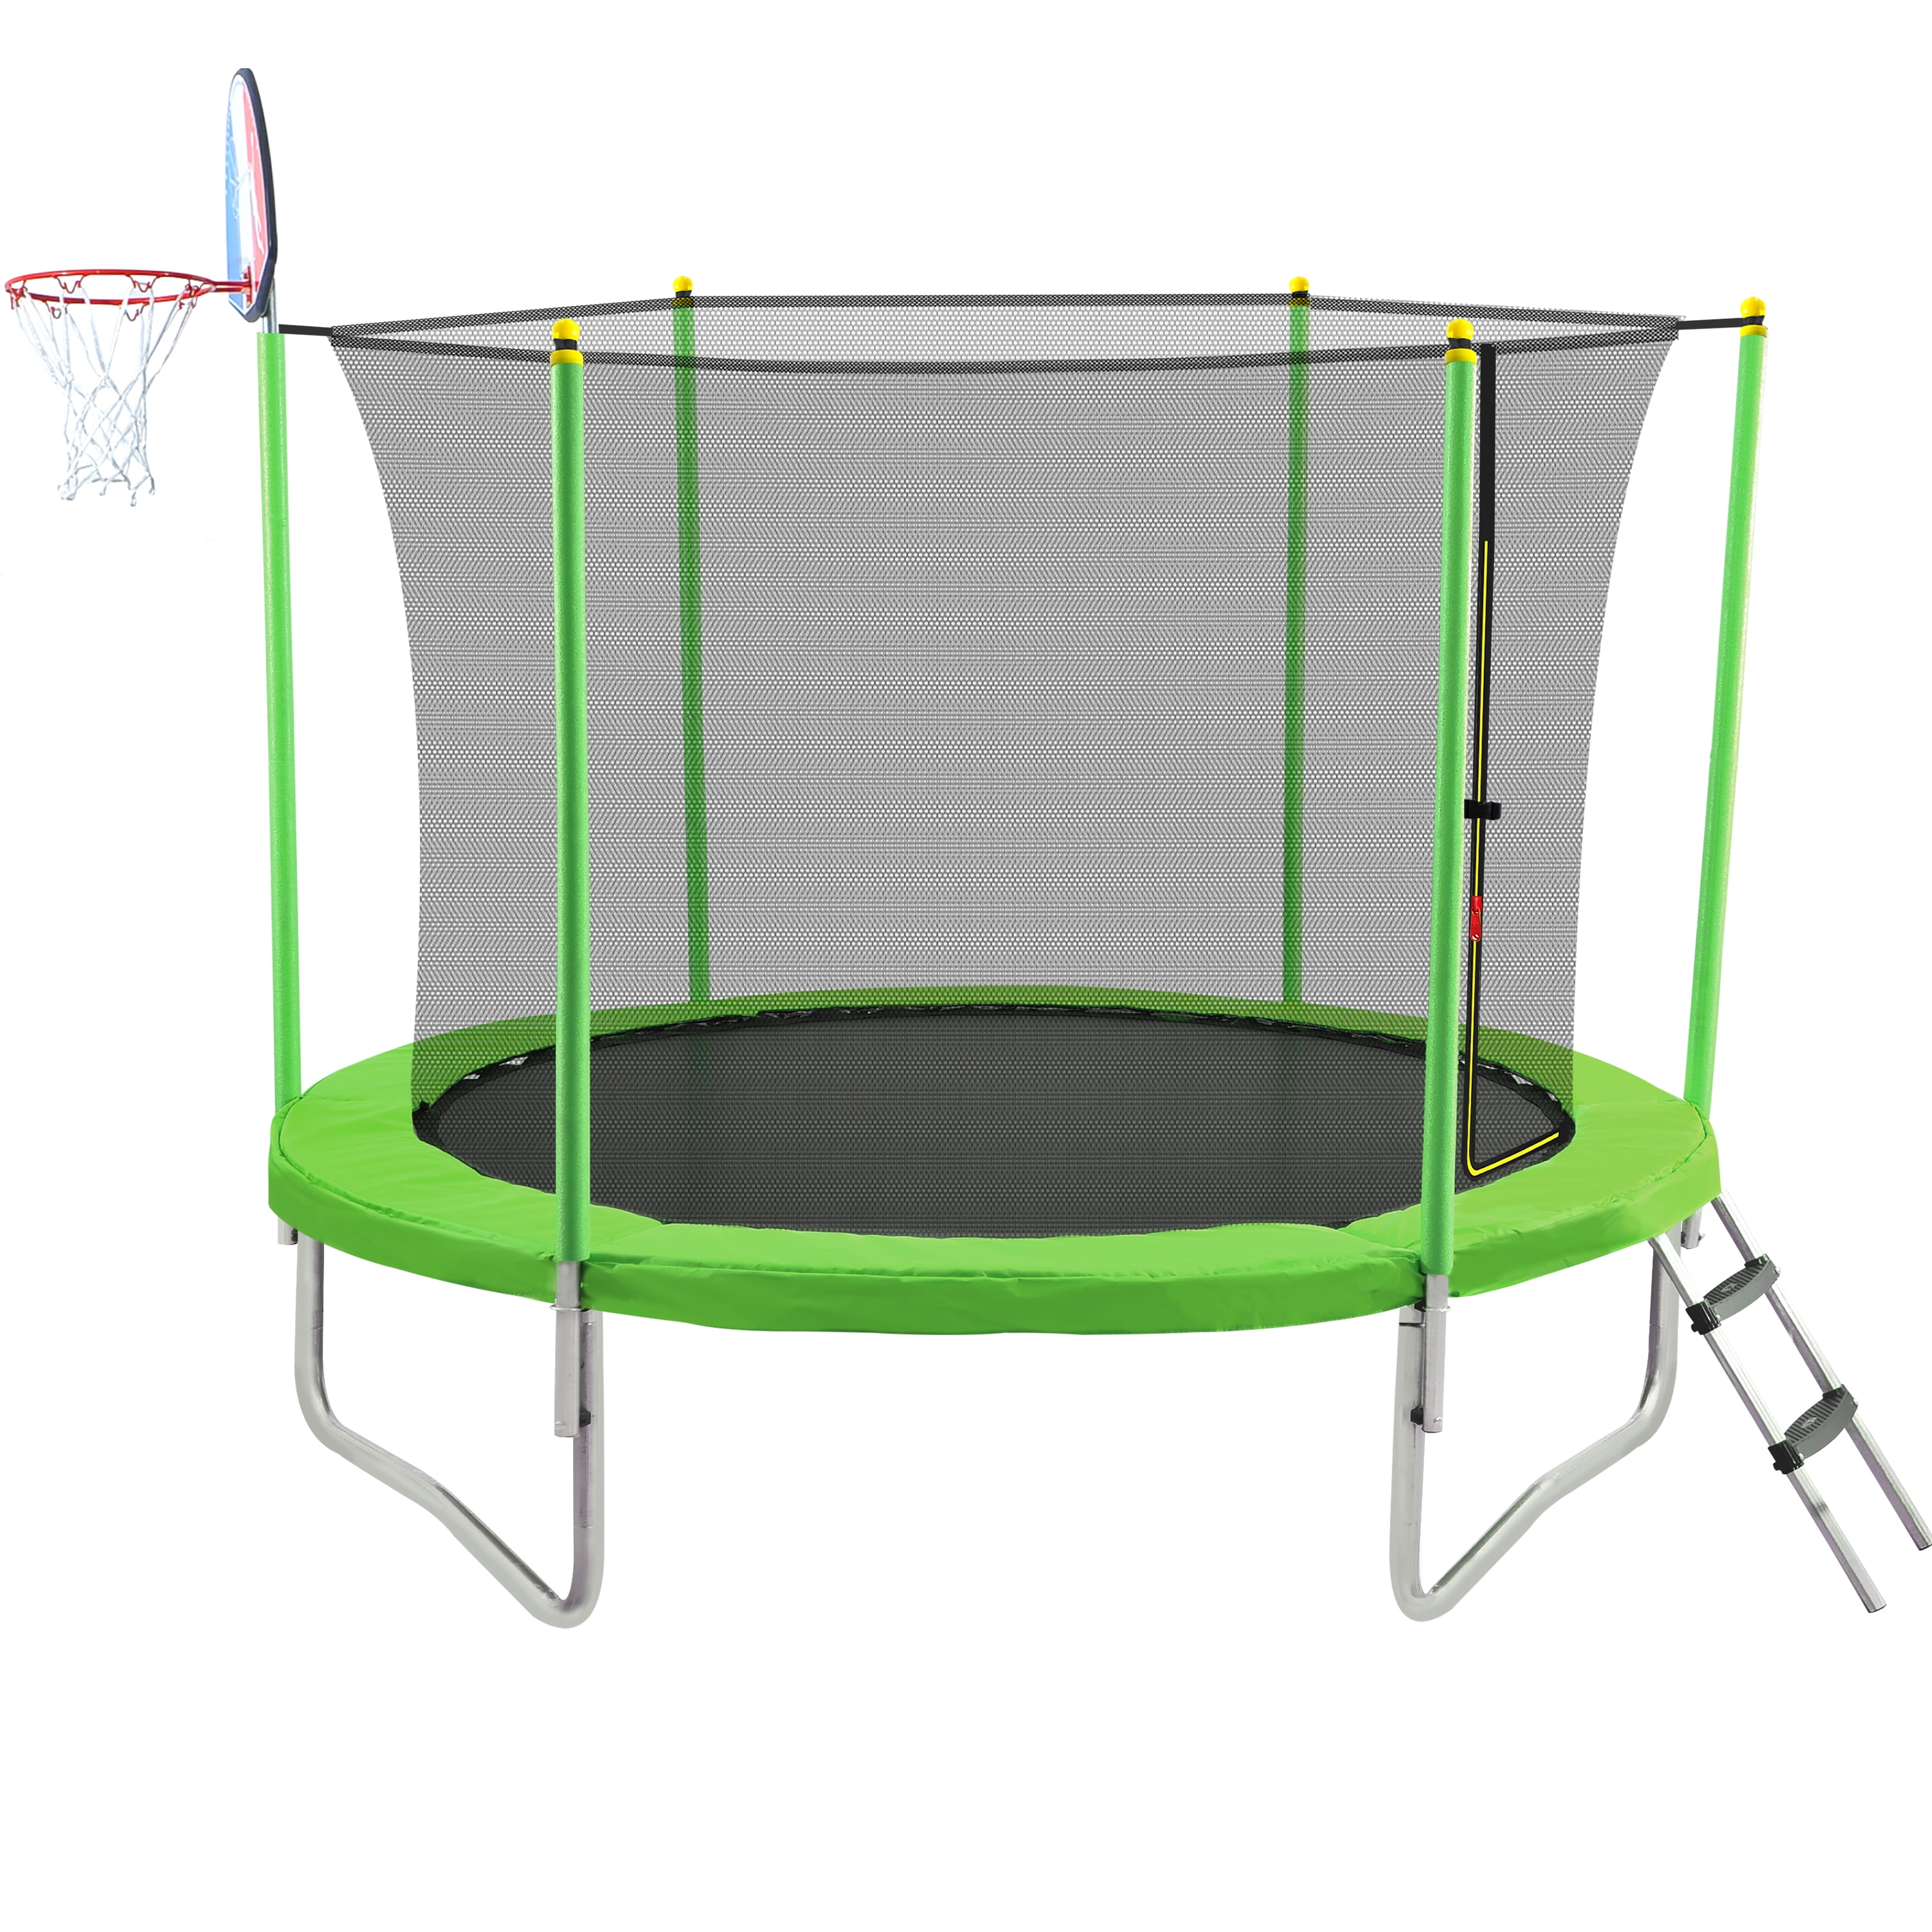 zweer Blaze ik heb het gevonden 10FT Trampoline for Kids with Safety Enclosure Net, Basketball Hoop and  Ladder, Easy Assembly Round Outdoor Recreational Trampoline - Walmart.com